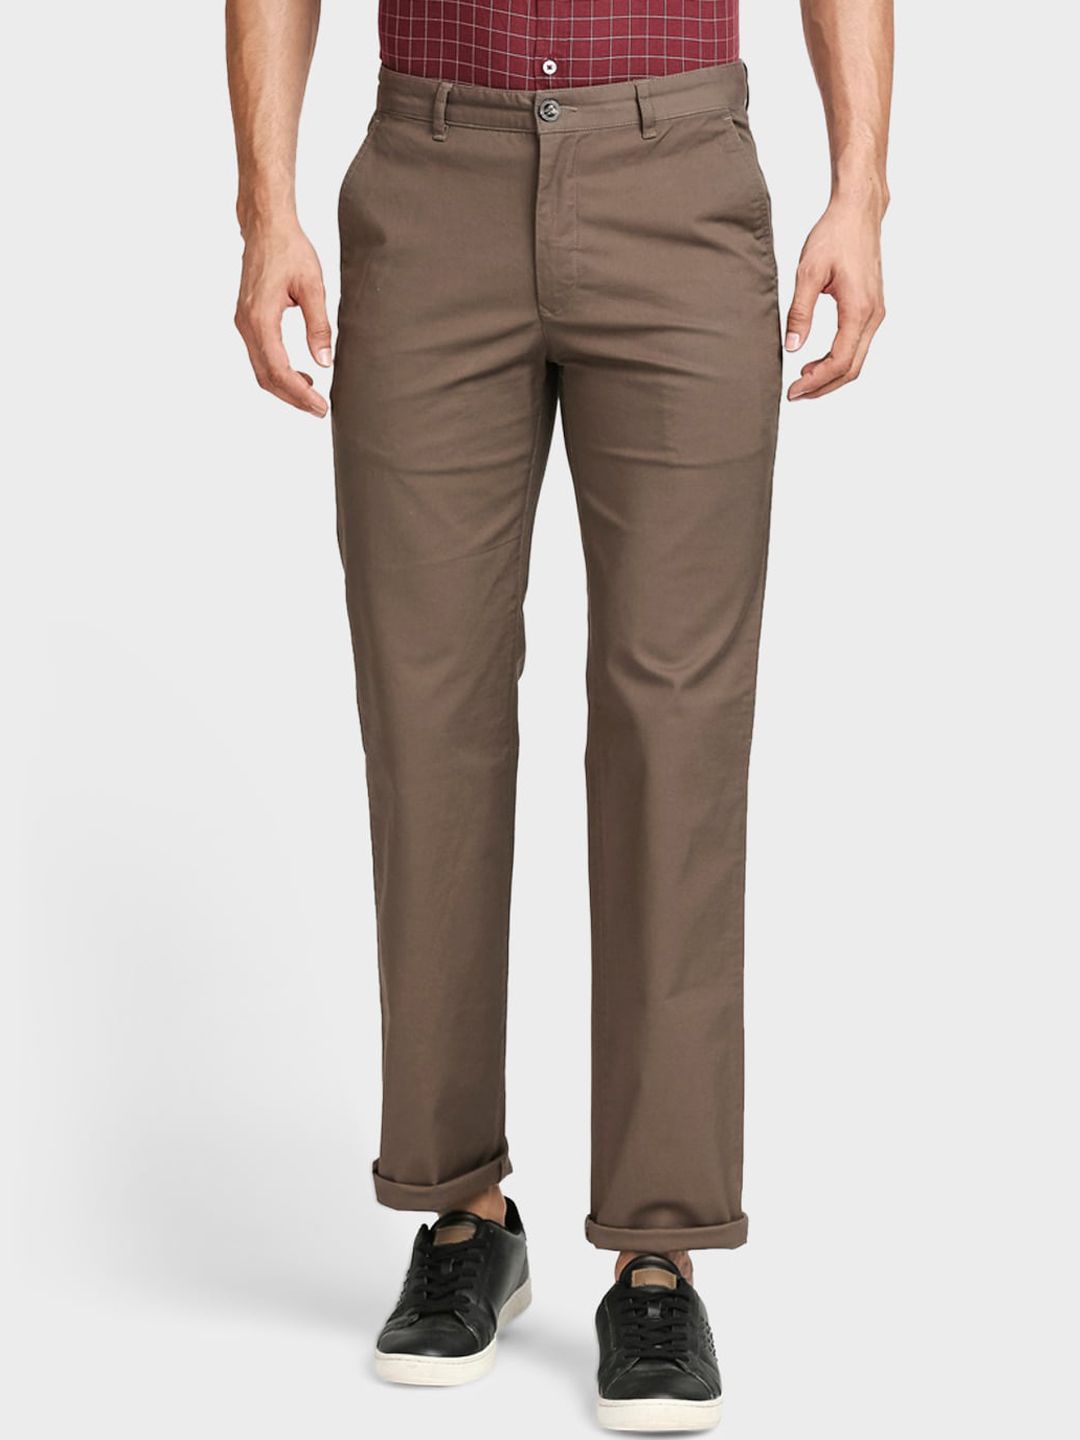 Buy Men Khaki Solid Super Slim Fit Casual Trousers Online  638015  Peter  England